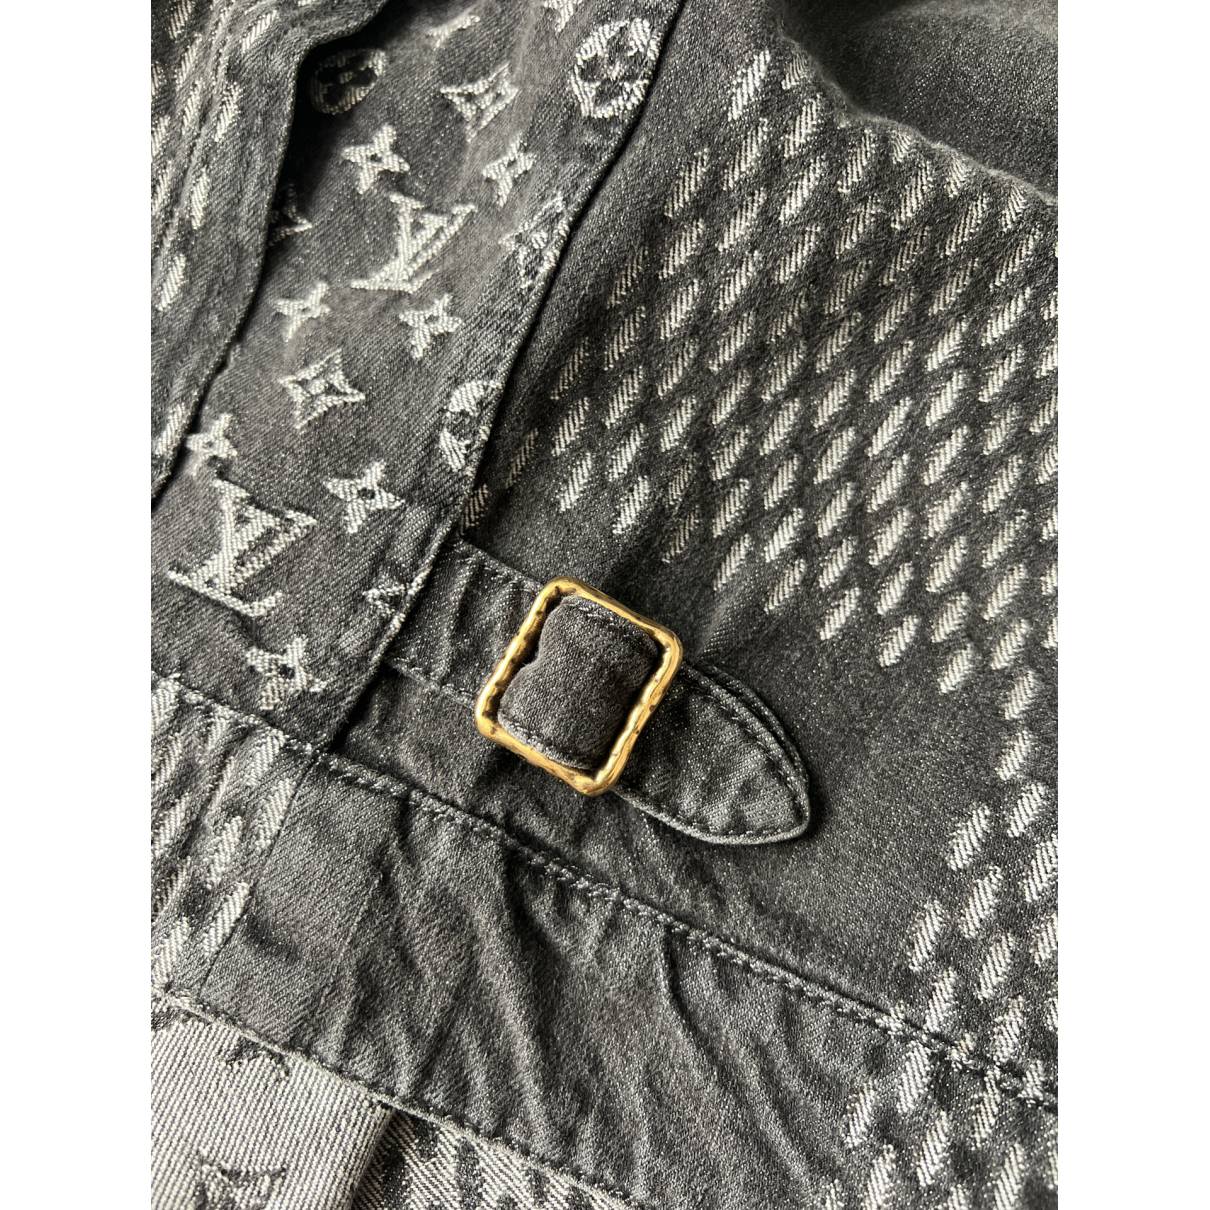 Louis Vuitton, Jackets & Coats, Louis Vuitton X Nigo Monogram Denim  Workwear Jacket